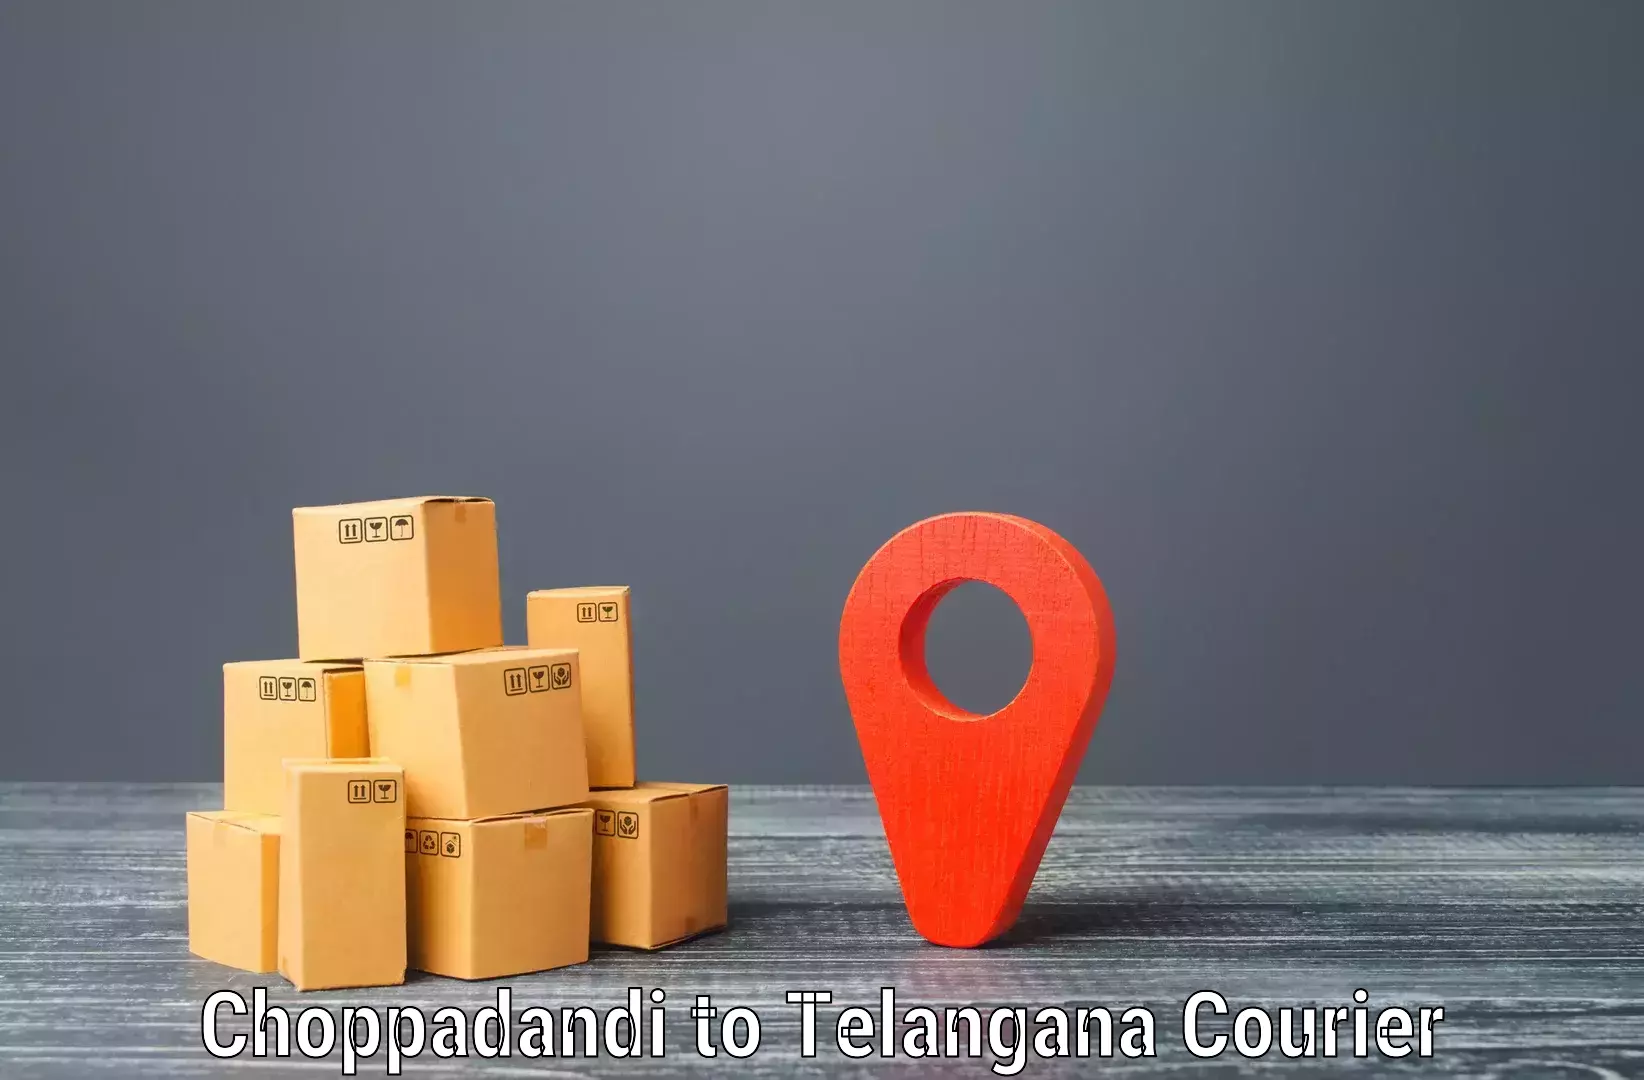 Doorstep delivery service Choppadandi to Yellareddy